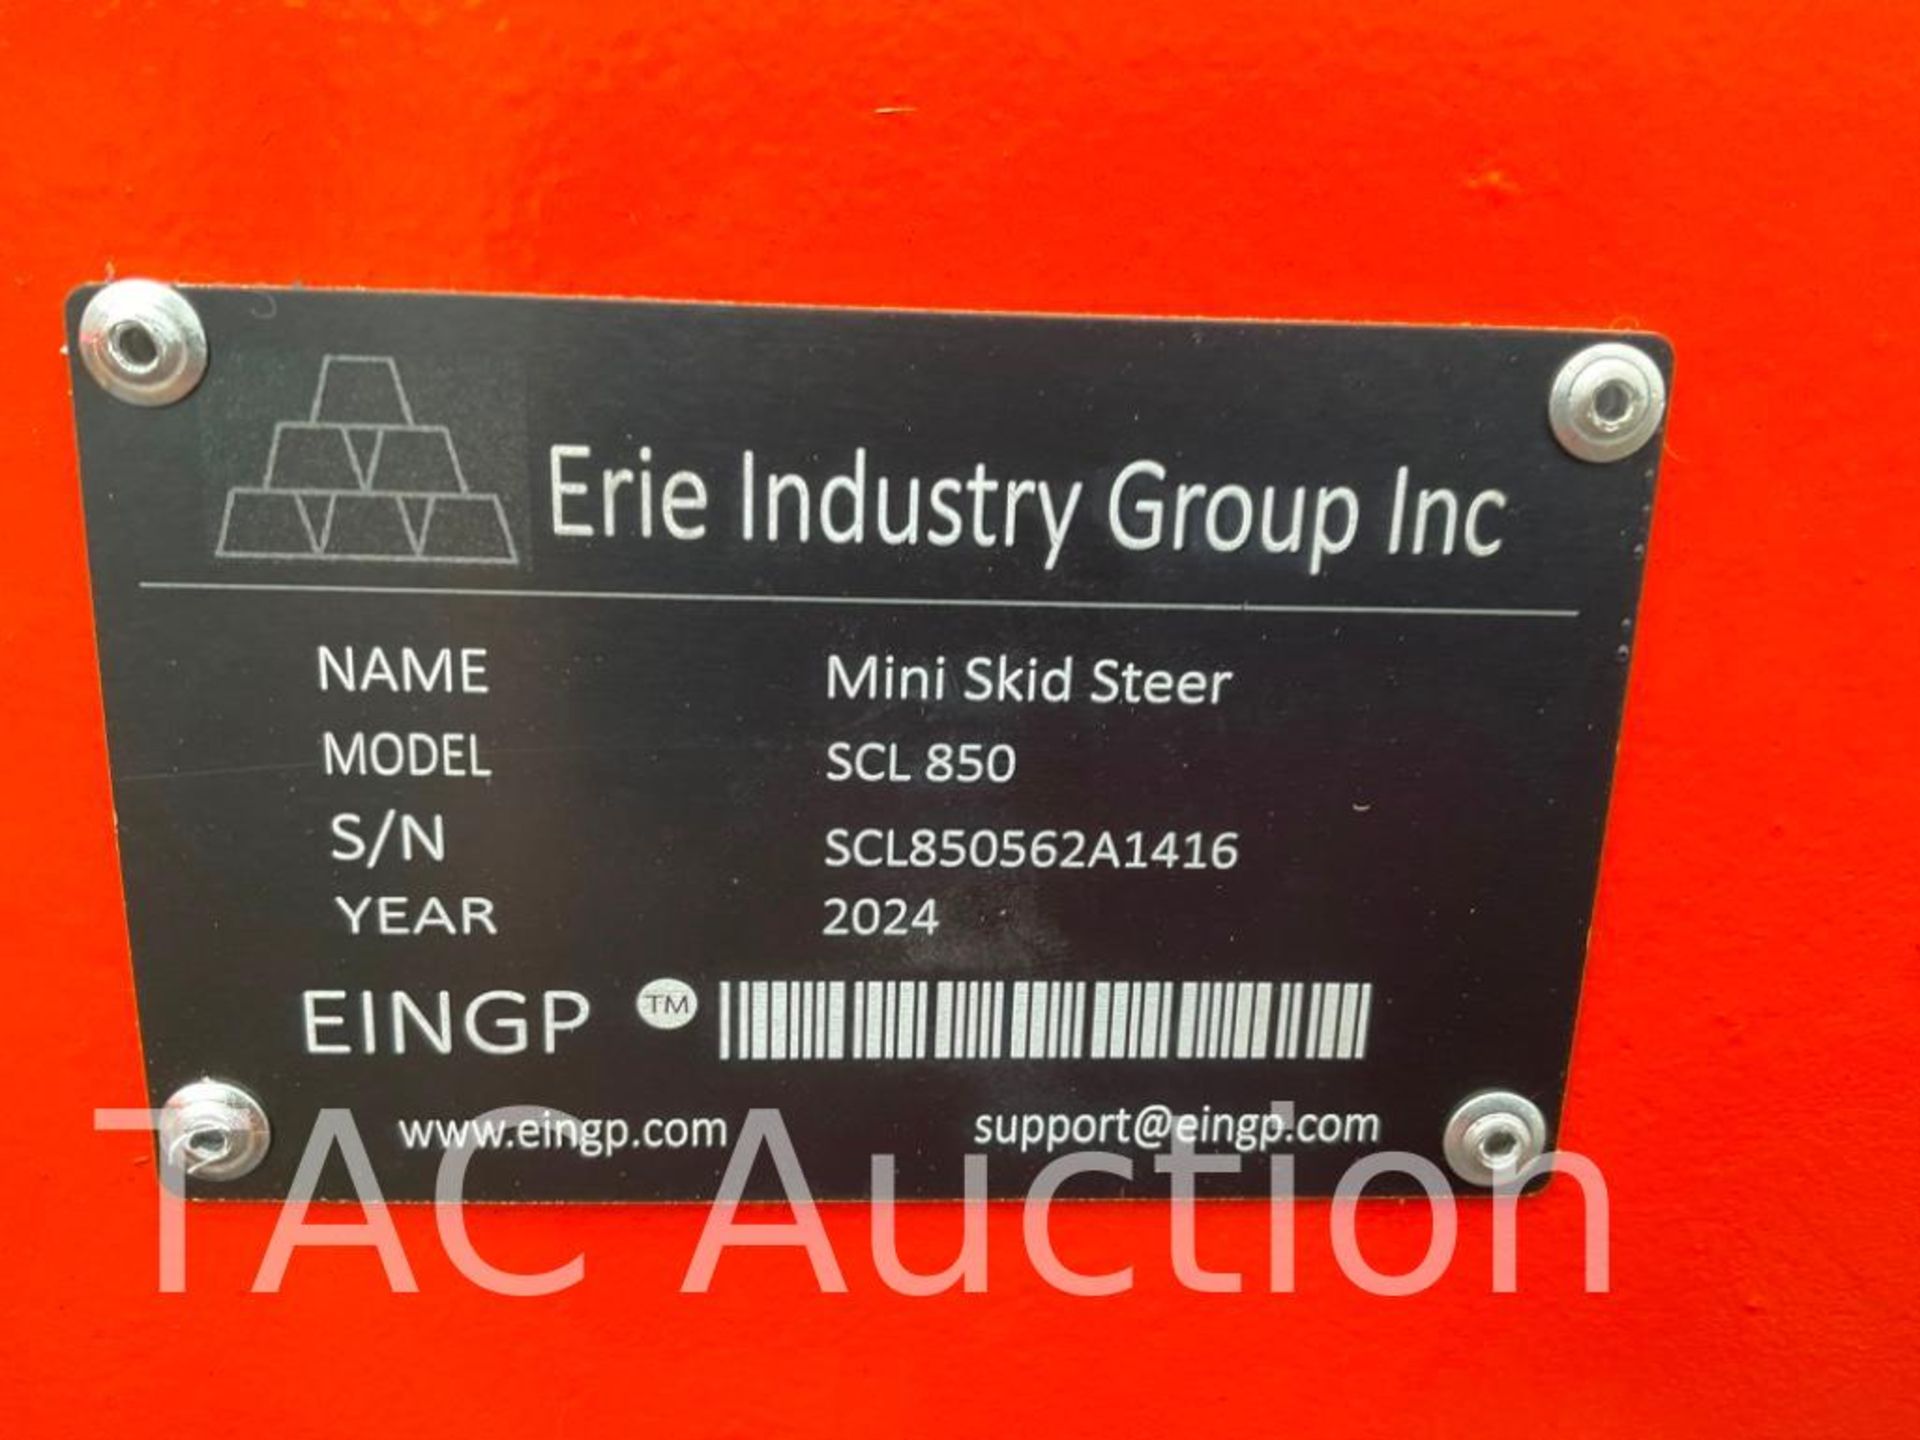 New SCL850 Mini Skid Steer Loader - Image 13 of 14